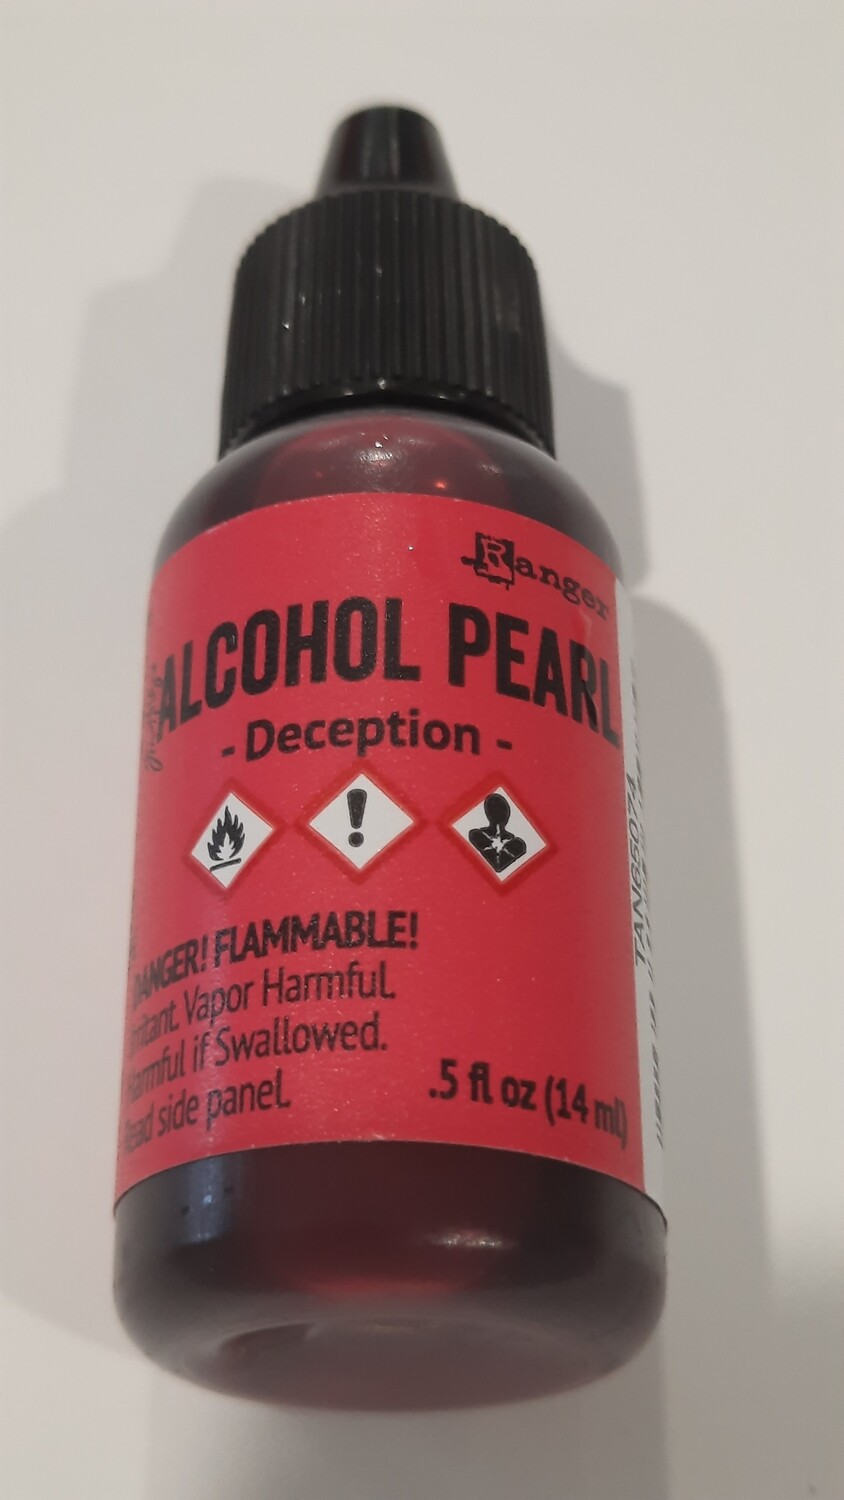 Alcohol Pearl Deception